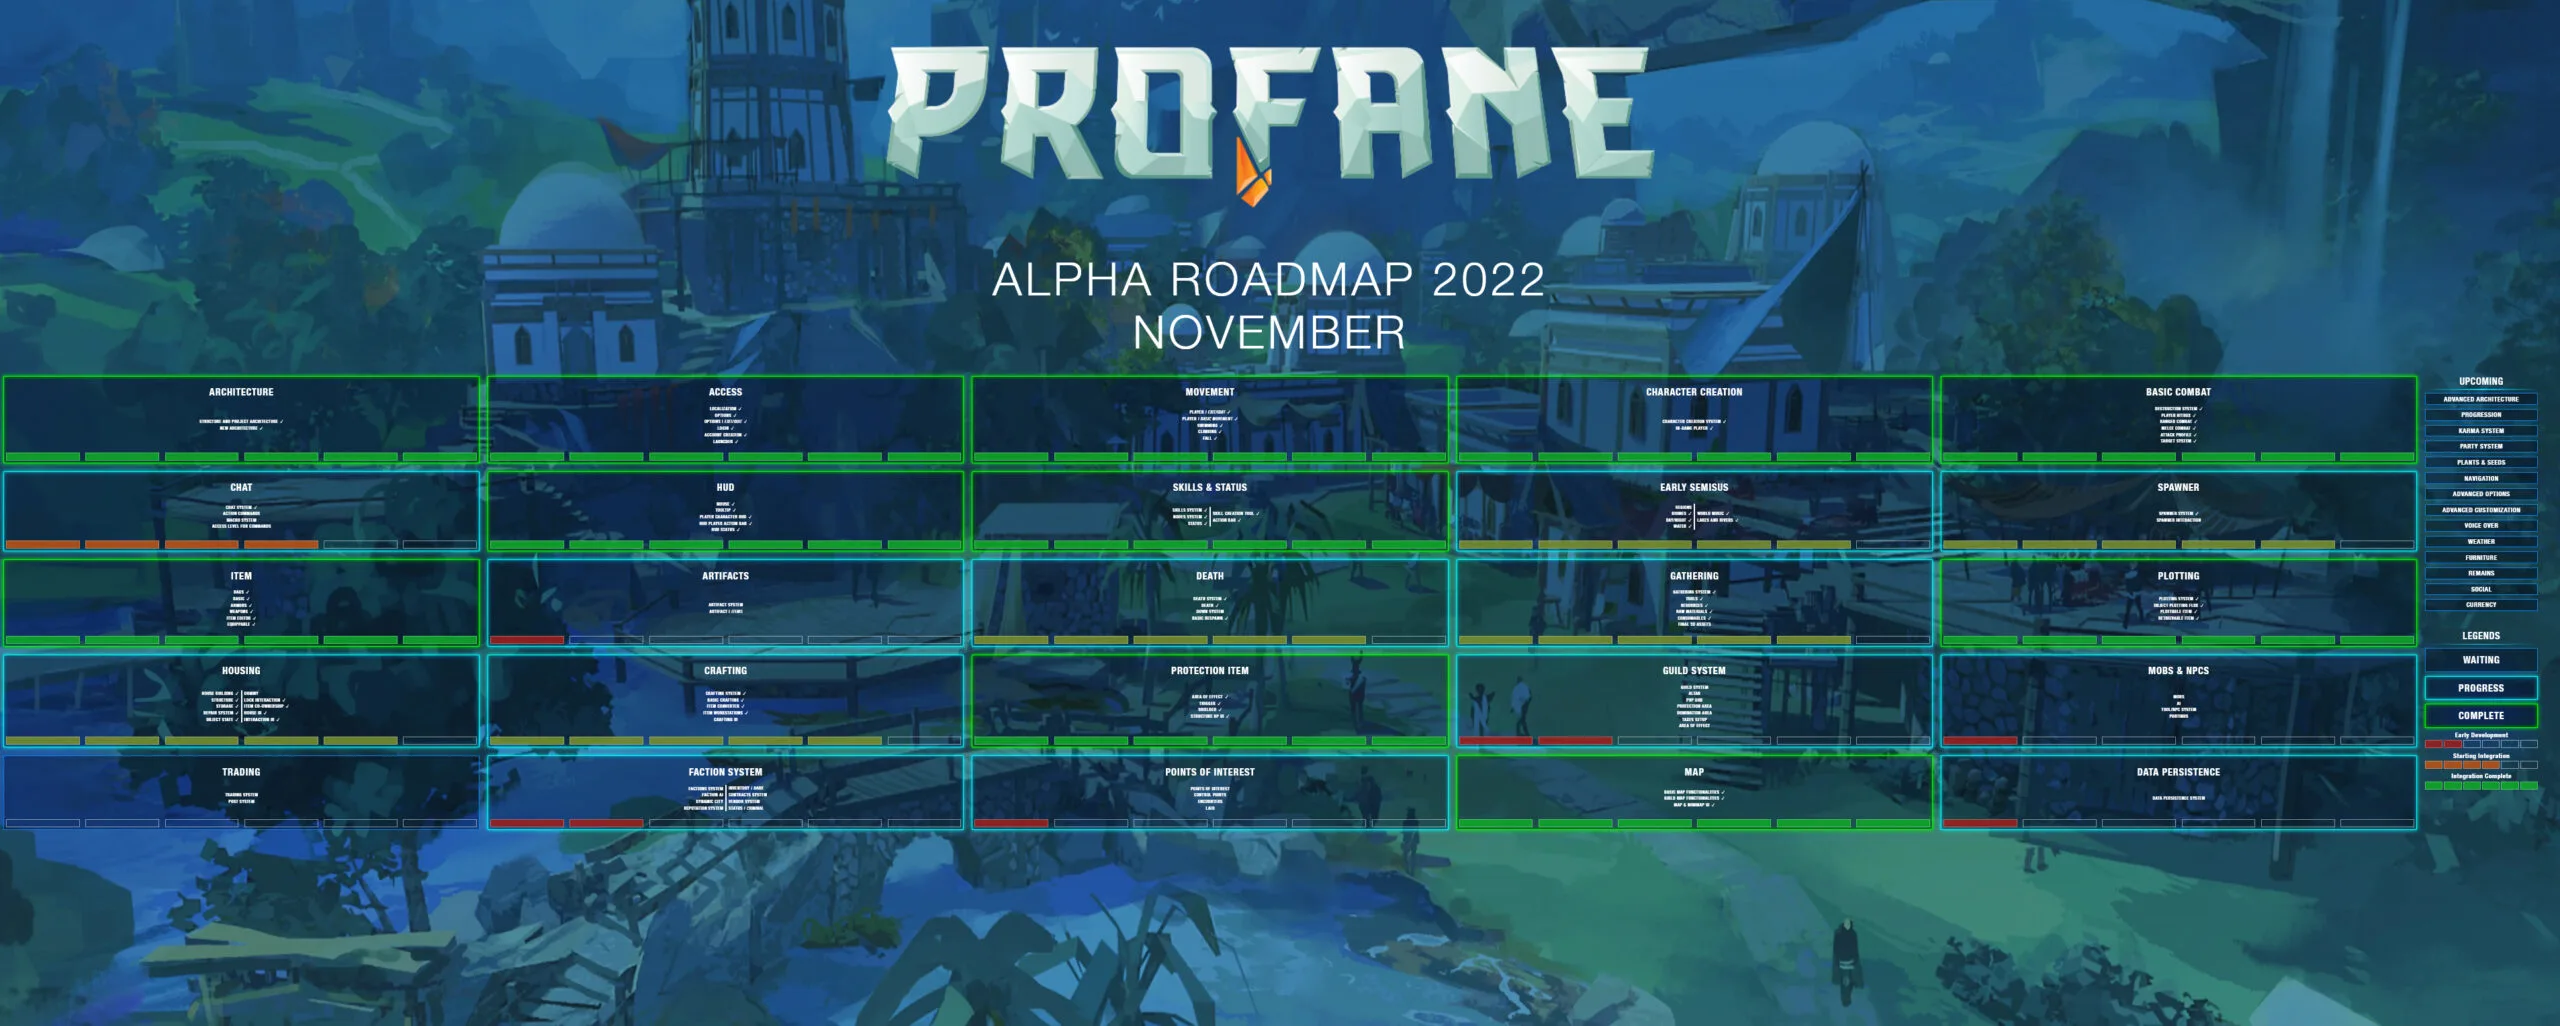 Profane Posts November Roadmap Showing Progress to Several Systems 5